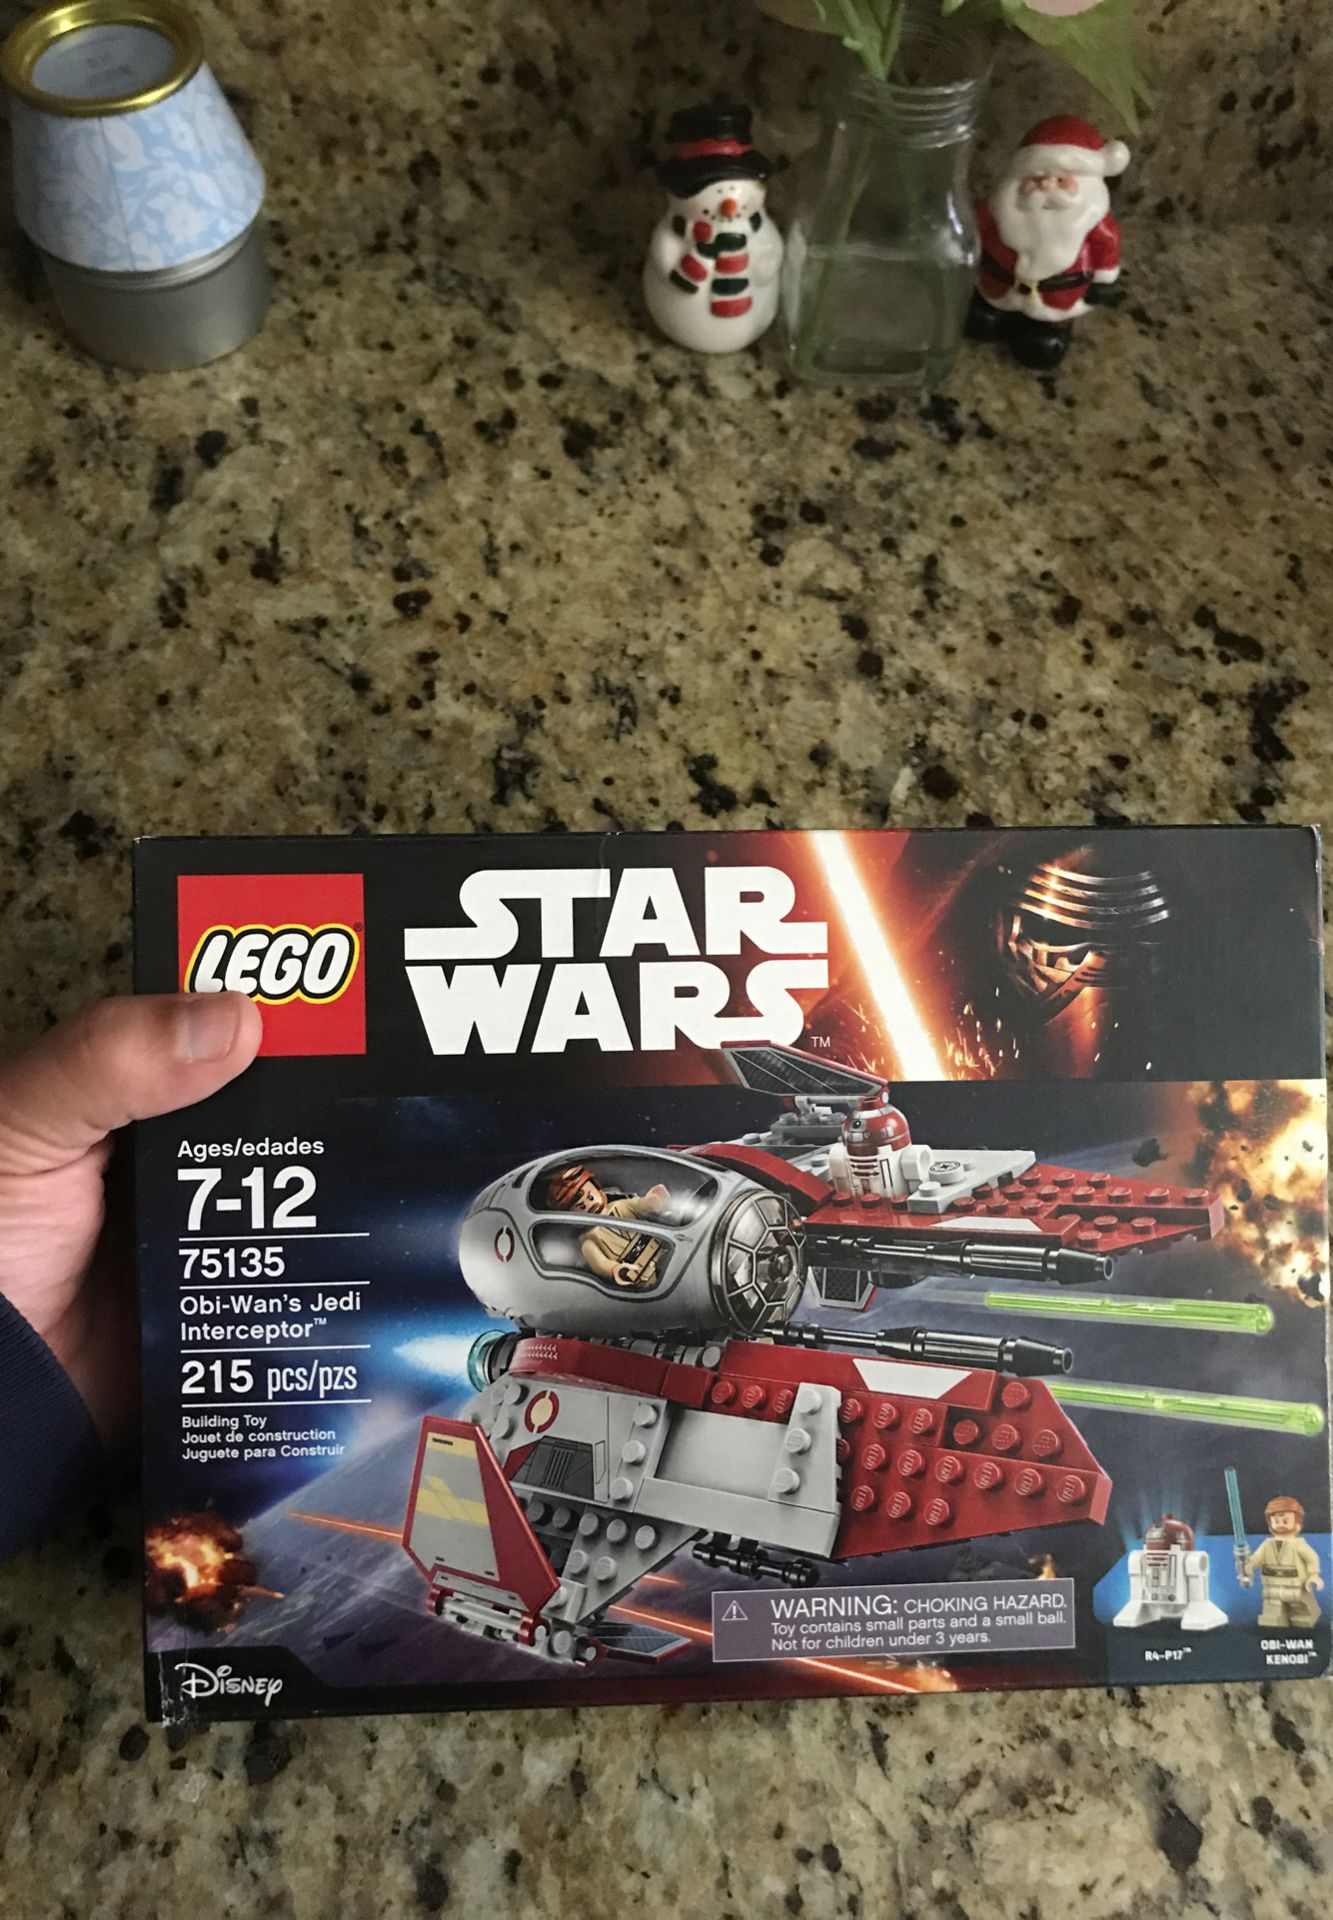 LEGO Star Wars The Force Awakens Obi-Wan's Jedi Interceptor Set #75135